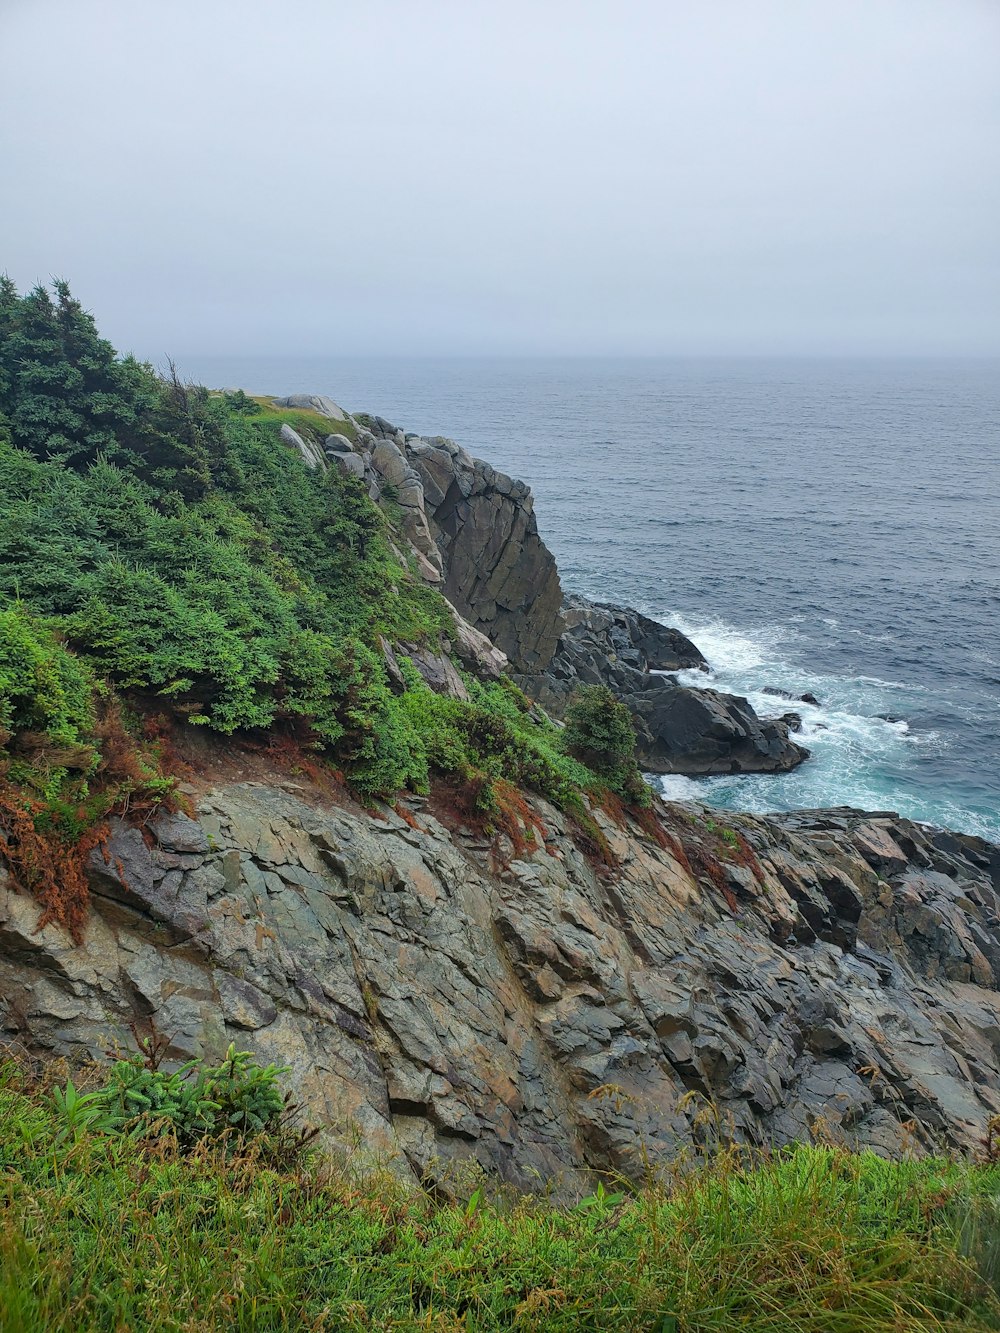 a rocky cliff overlooks the ocean on a foggy day